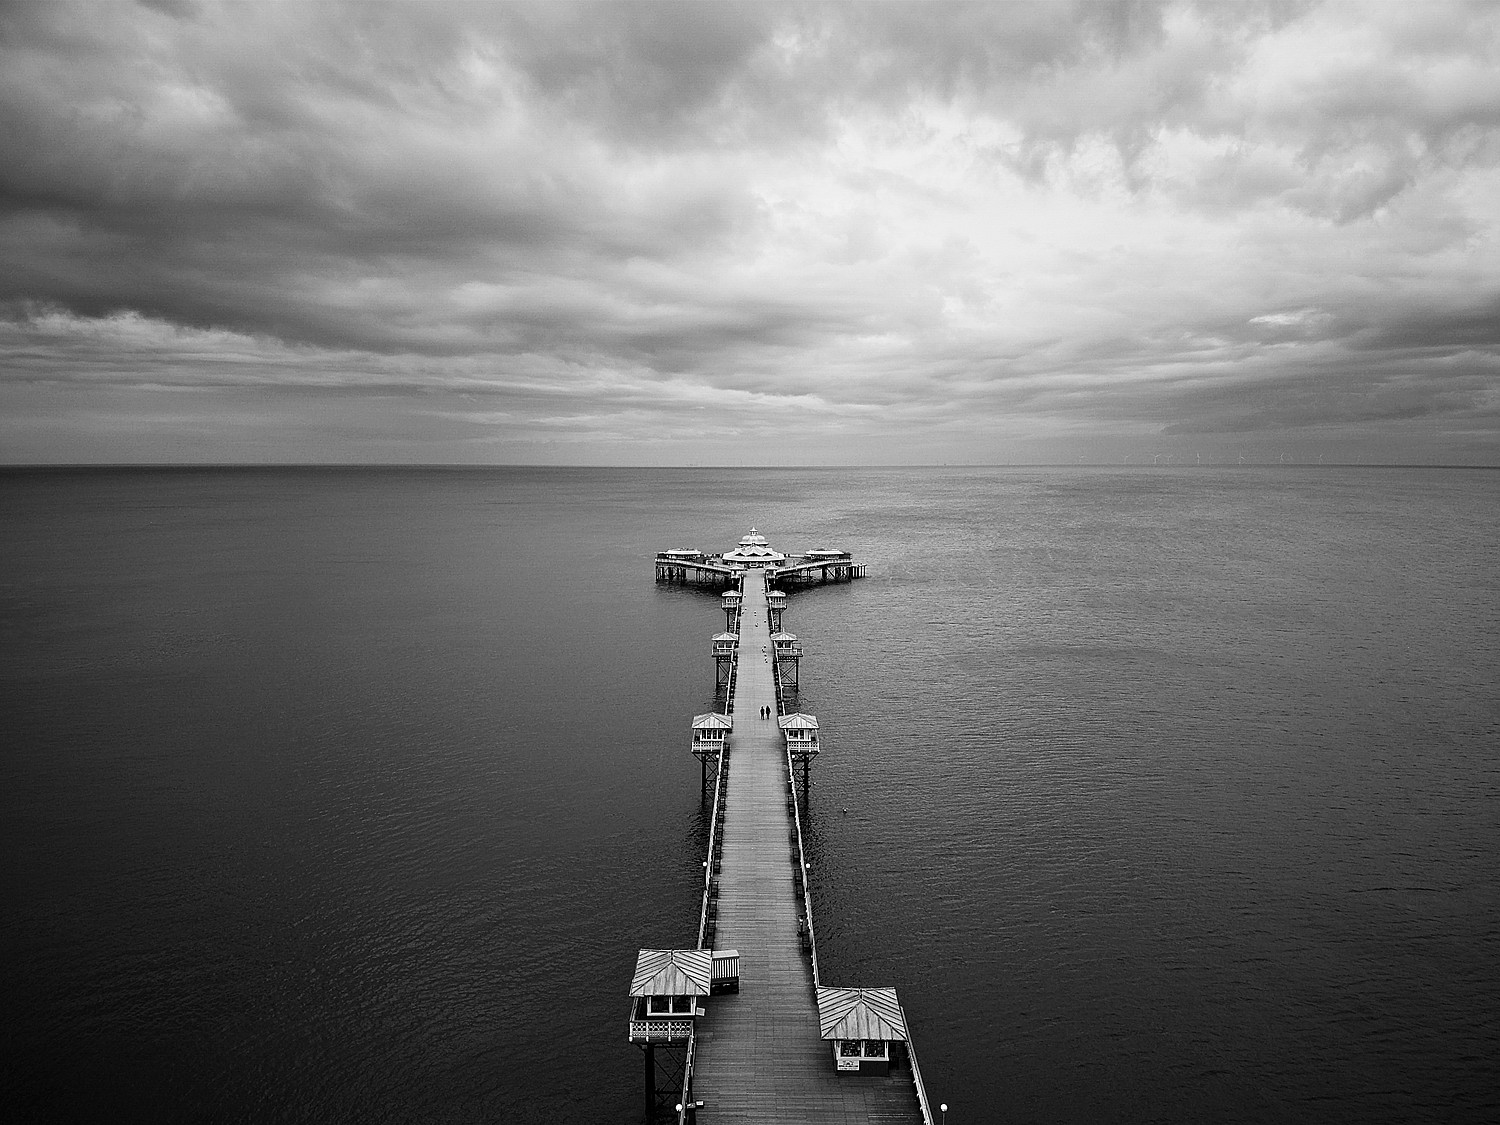 Black and white. Monochrome. Award winning. Drone operator. Llandudno Pier Wales by Sam Davis Aerial Photographer